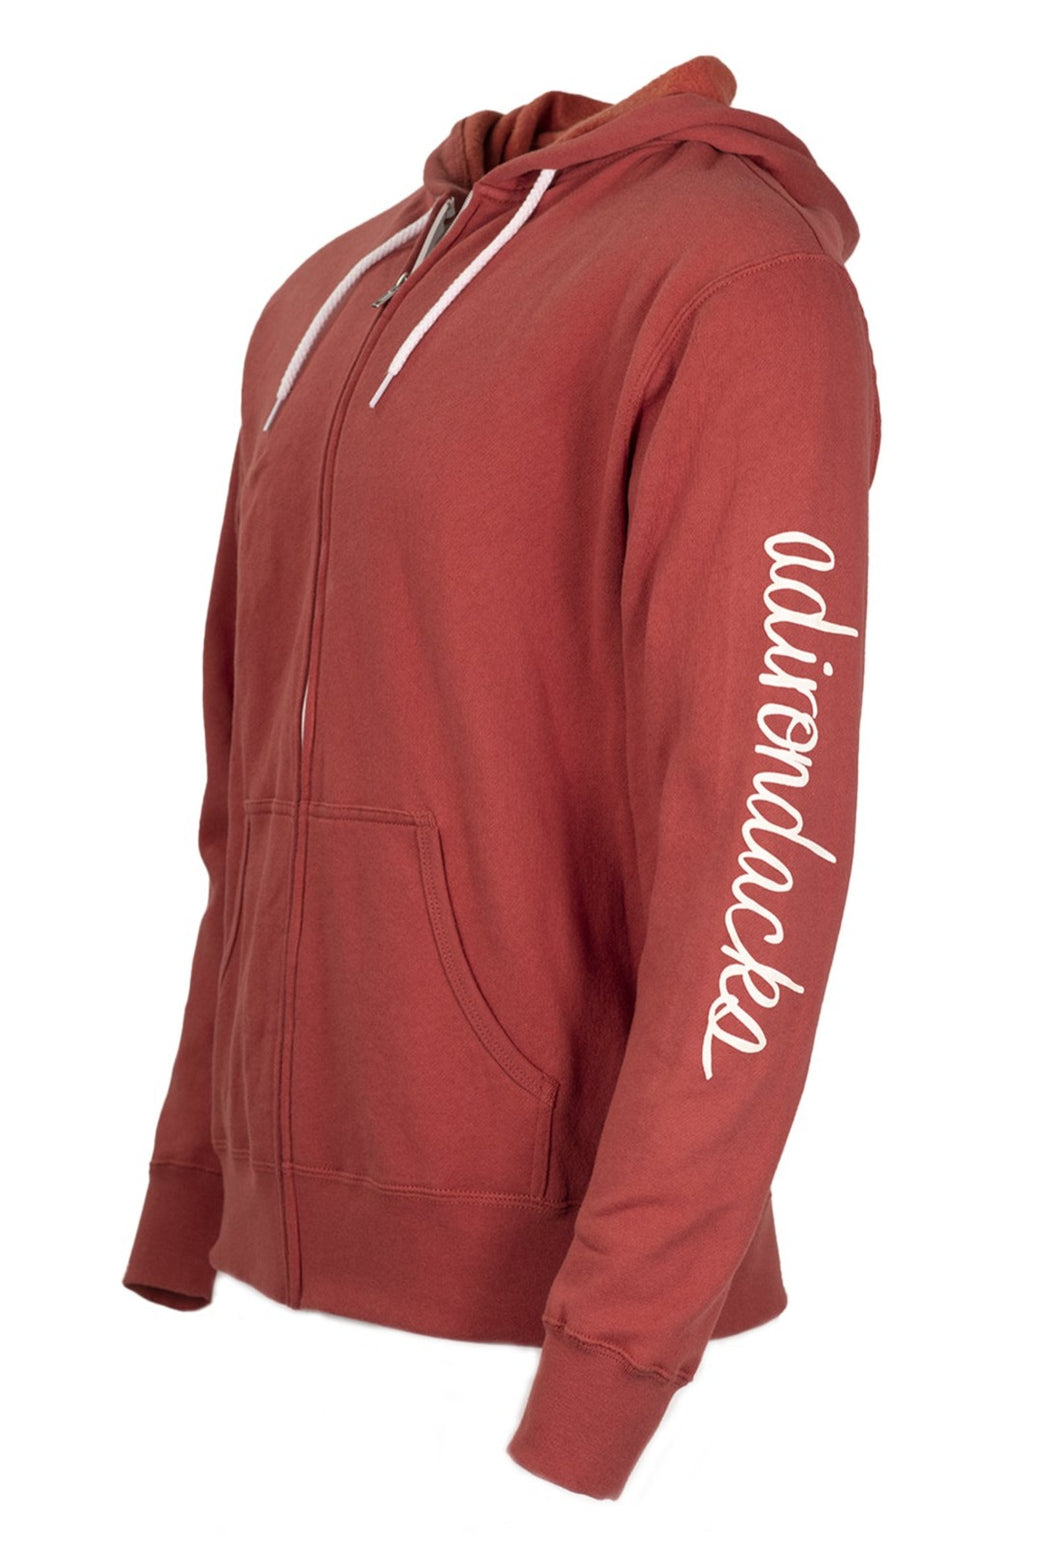 Zippered Nantucket Red Adirondack Sweatshirt (provides 20 meals)